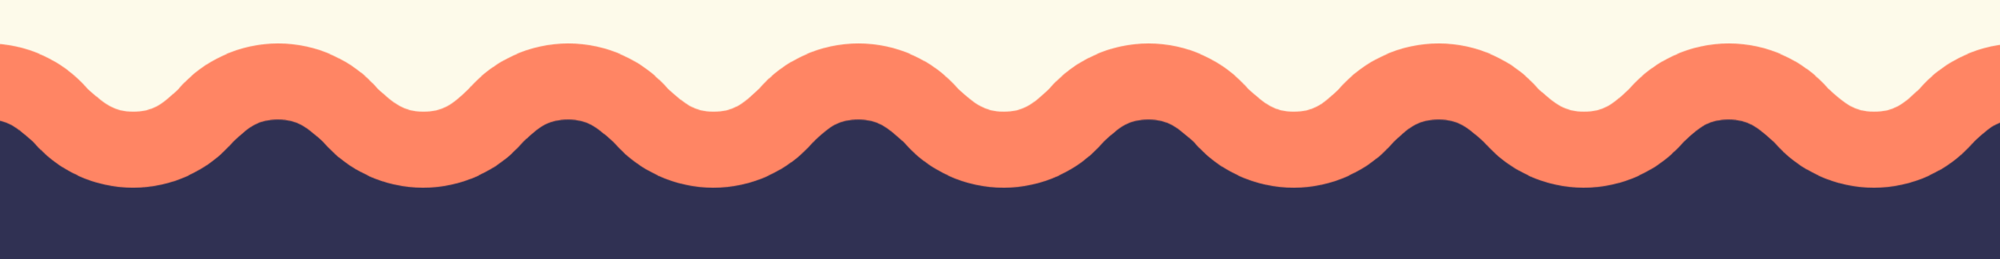 Minderful_orange_wave_inverted